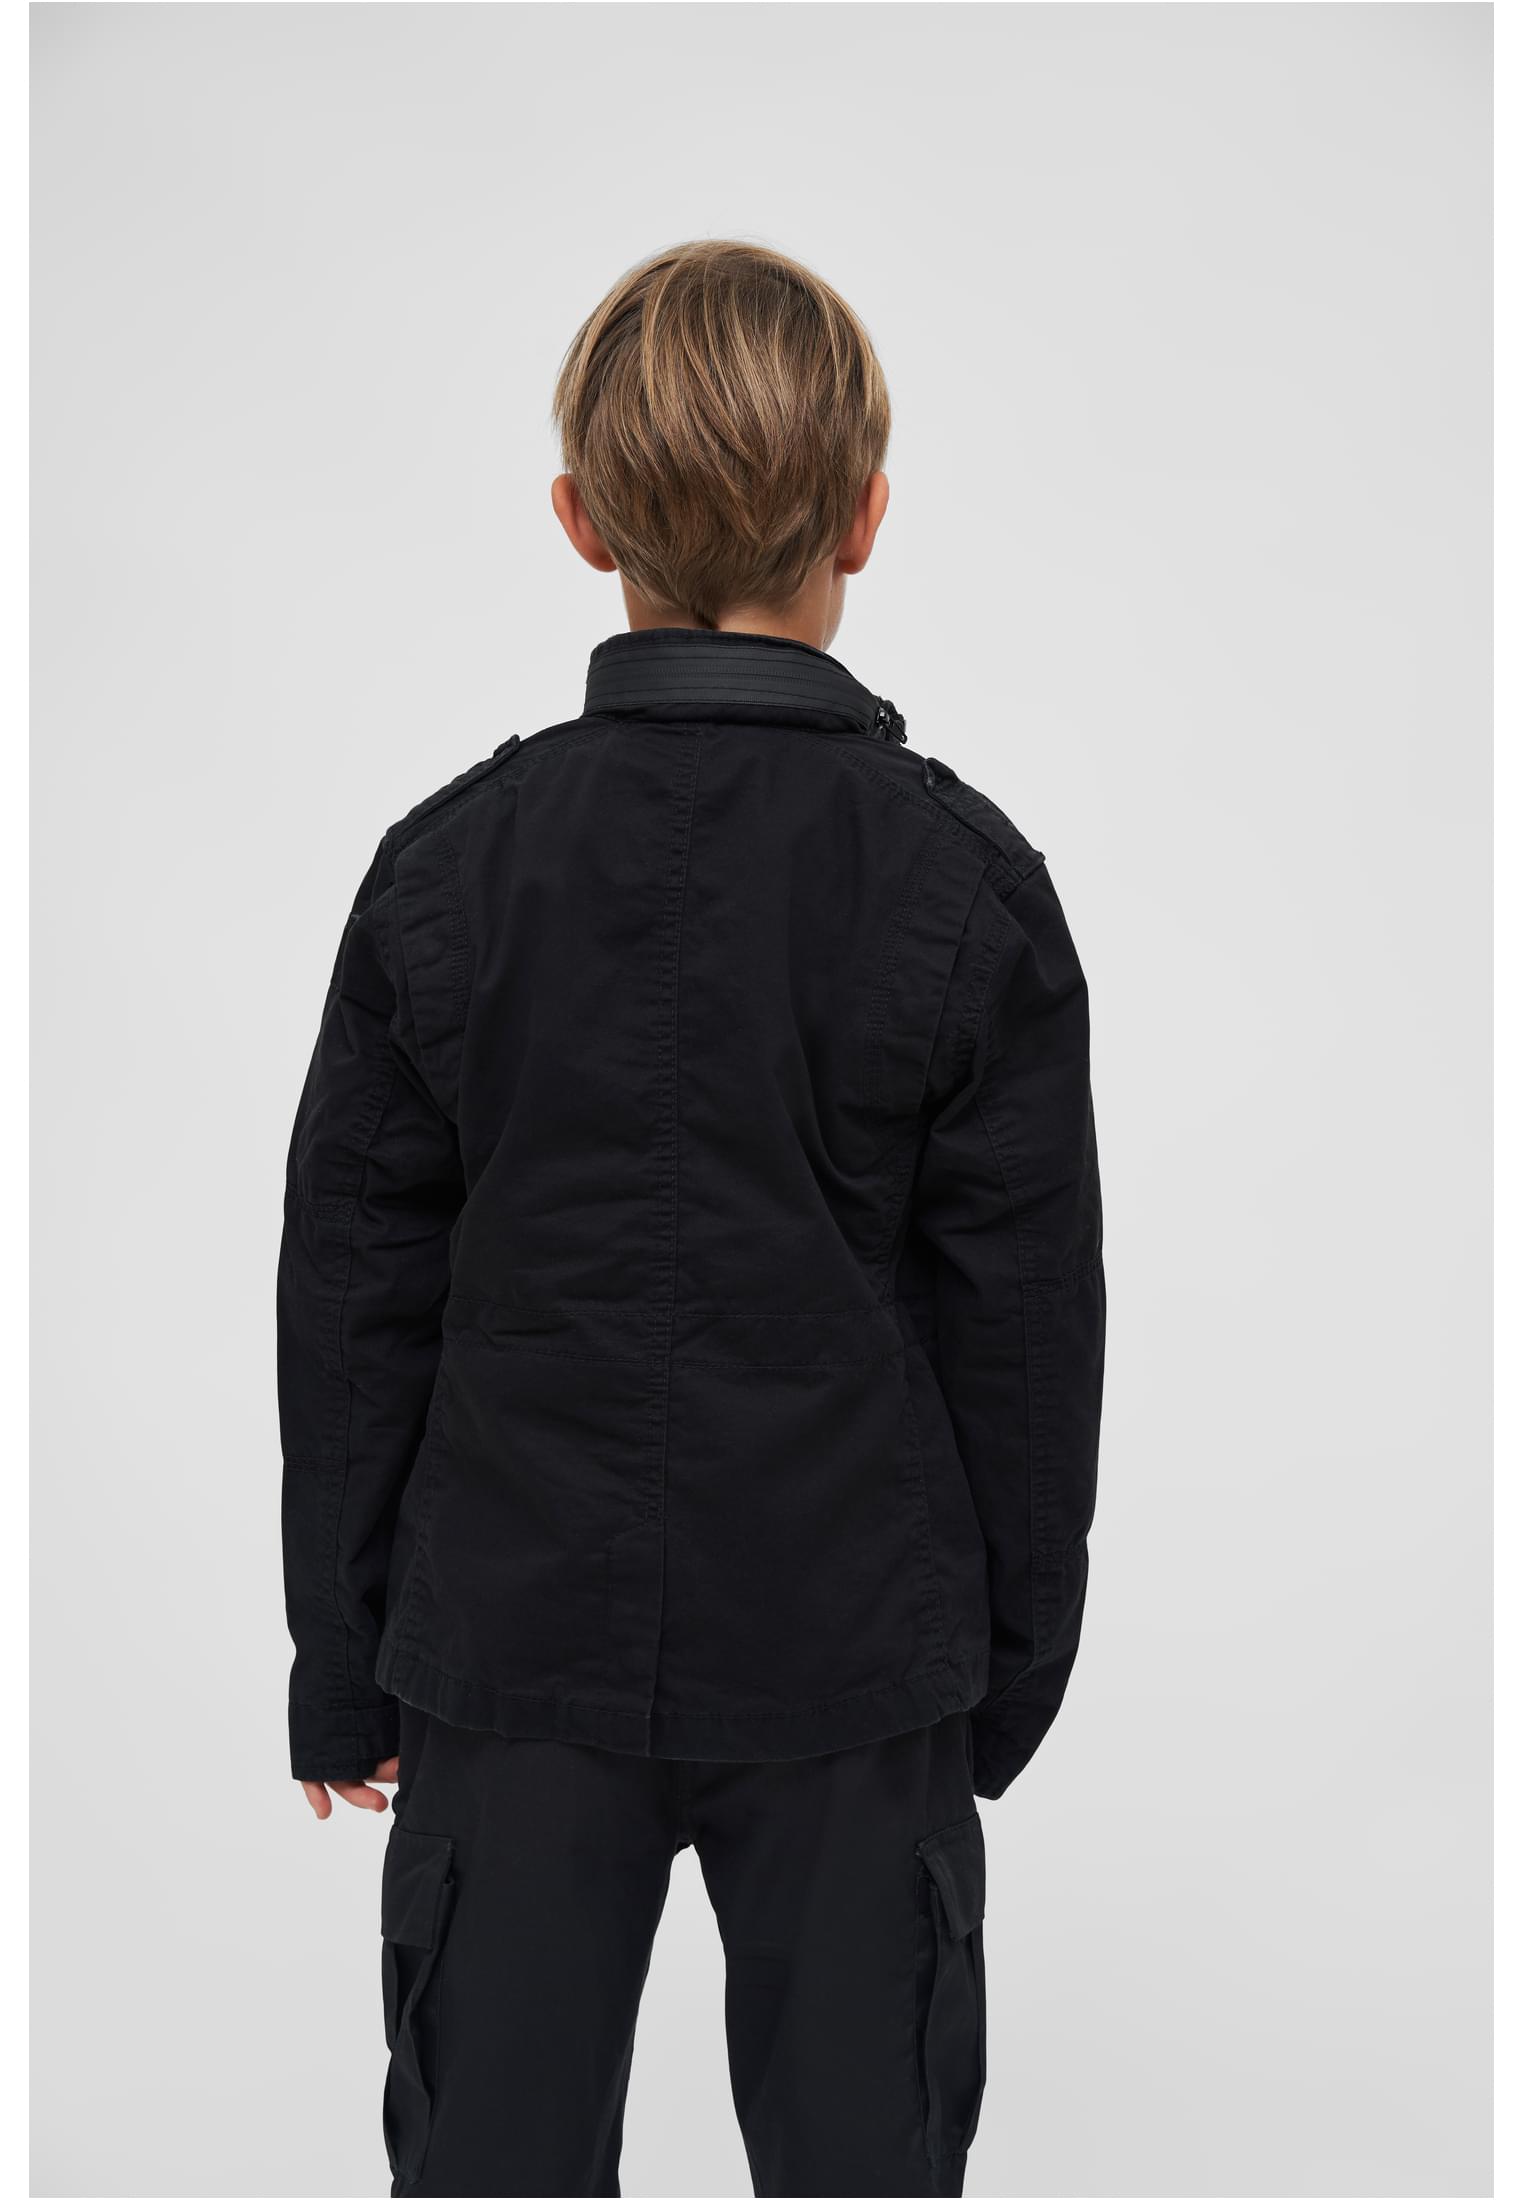 Kinder Kids Britannia Jacket in Farbe black